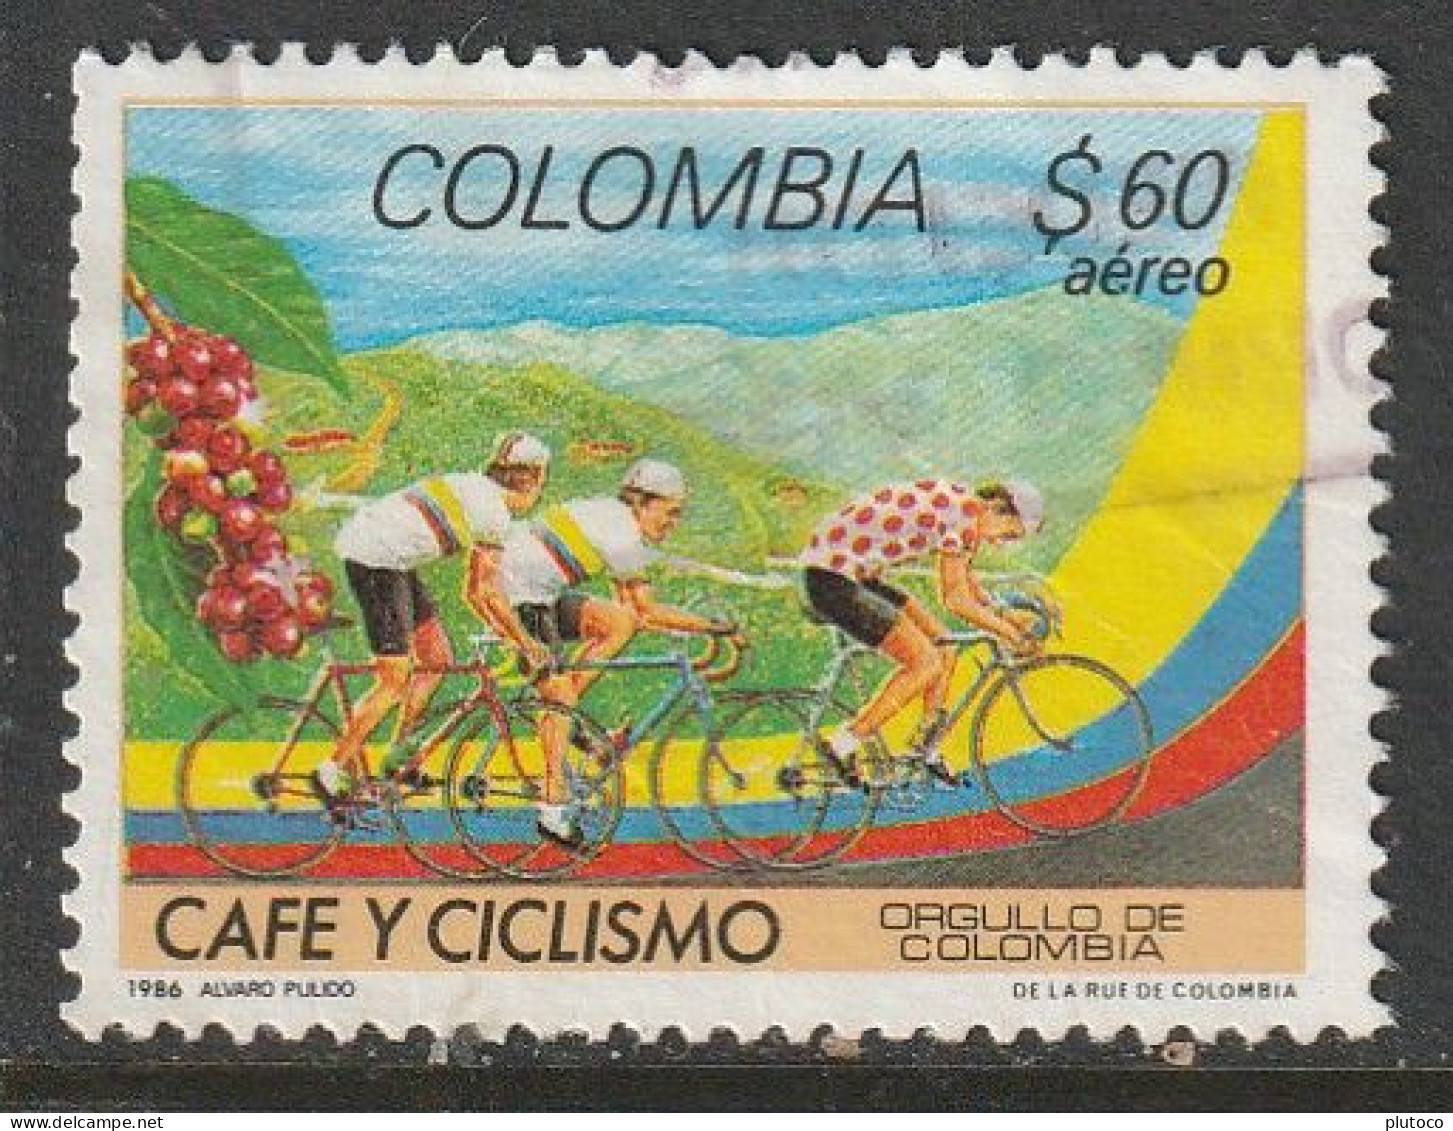 COLOMBIA, USED STAMP, OBLITERÉ, SELLO USADO - Kolumbien